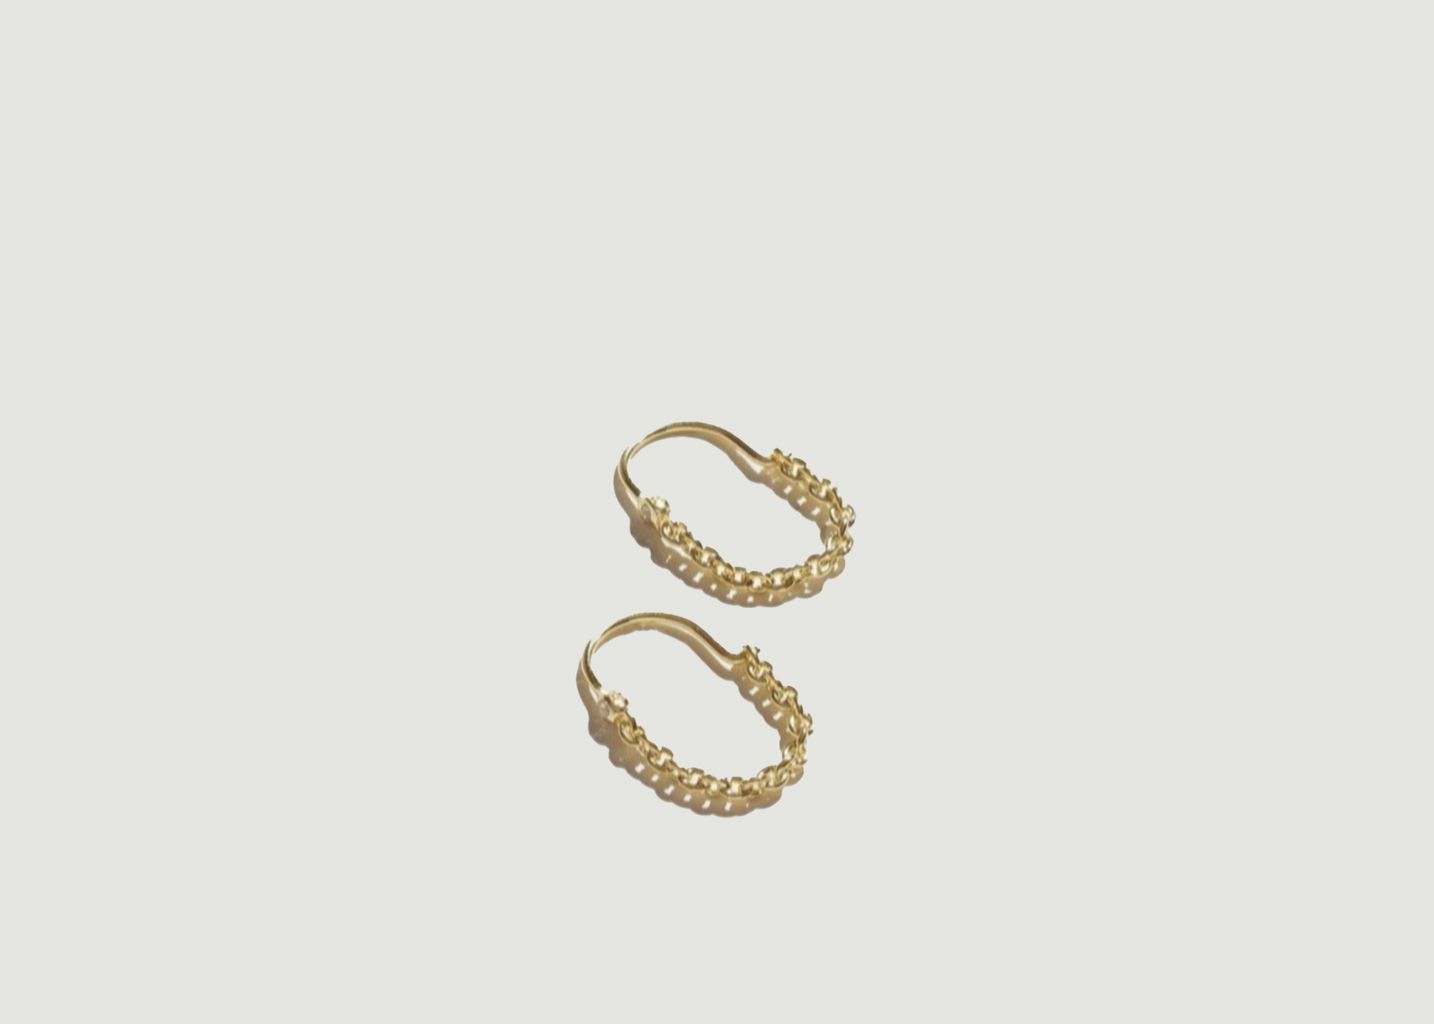 Suspension gold plated brass dangling earrings - Pamela Love